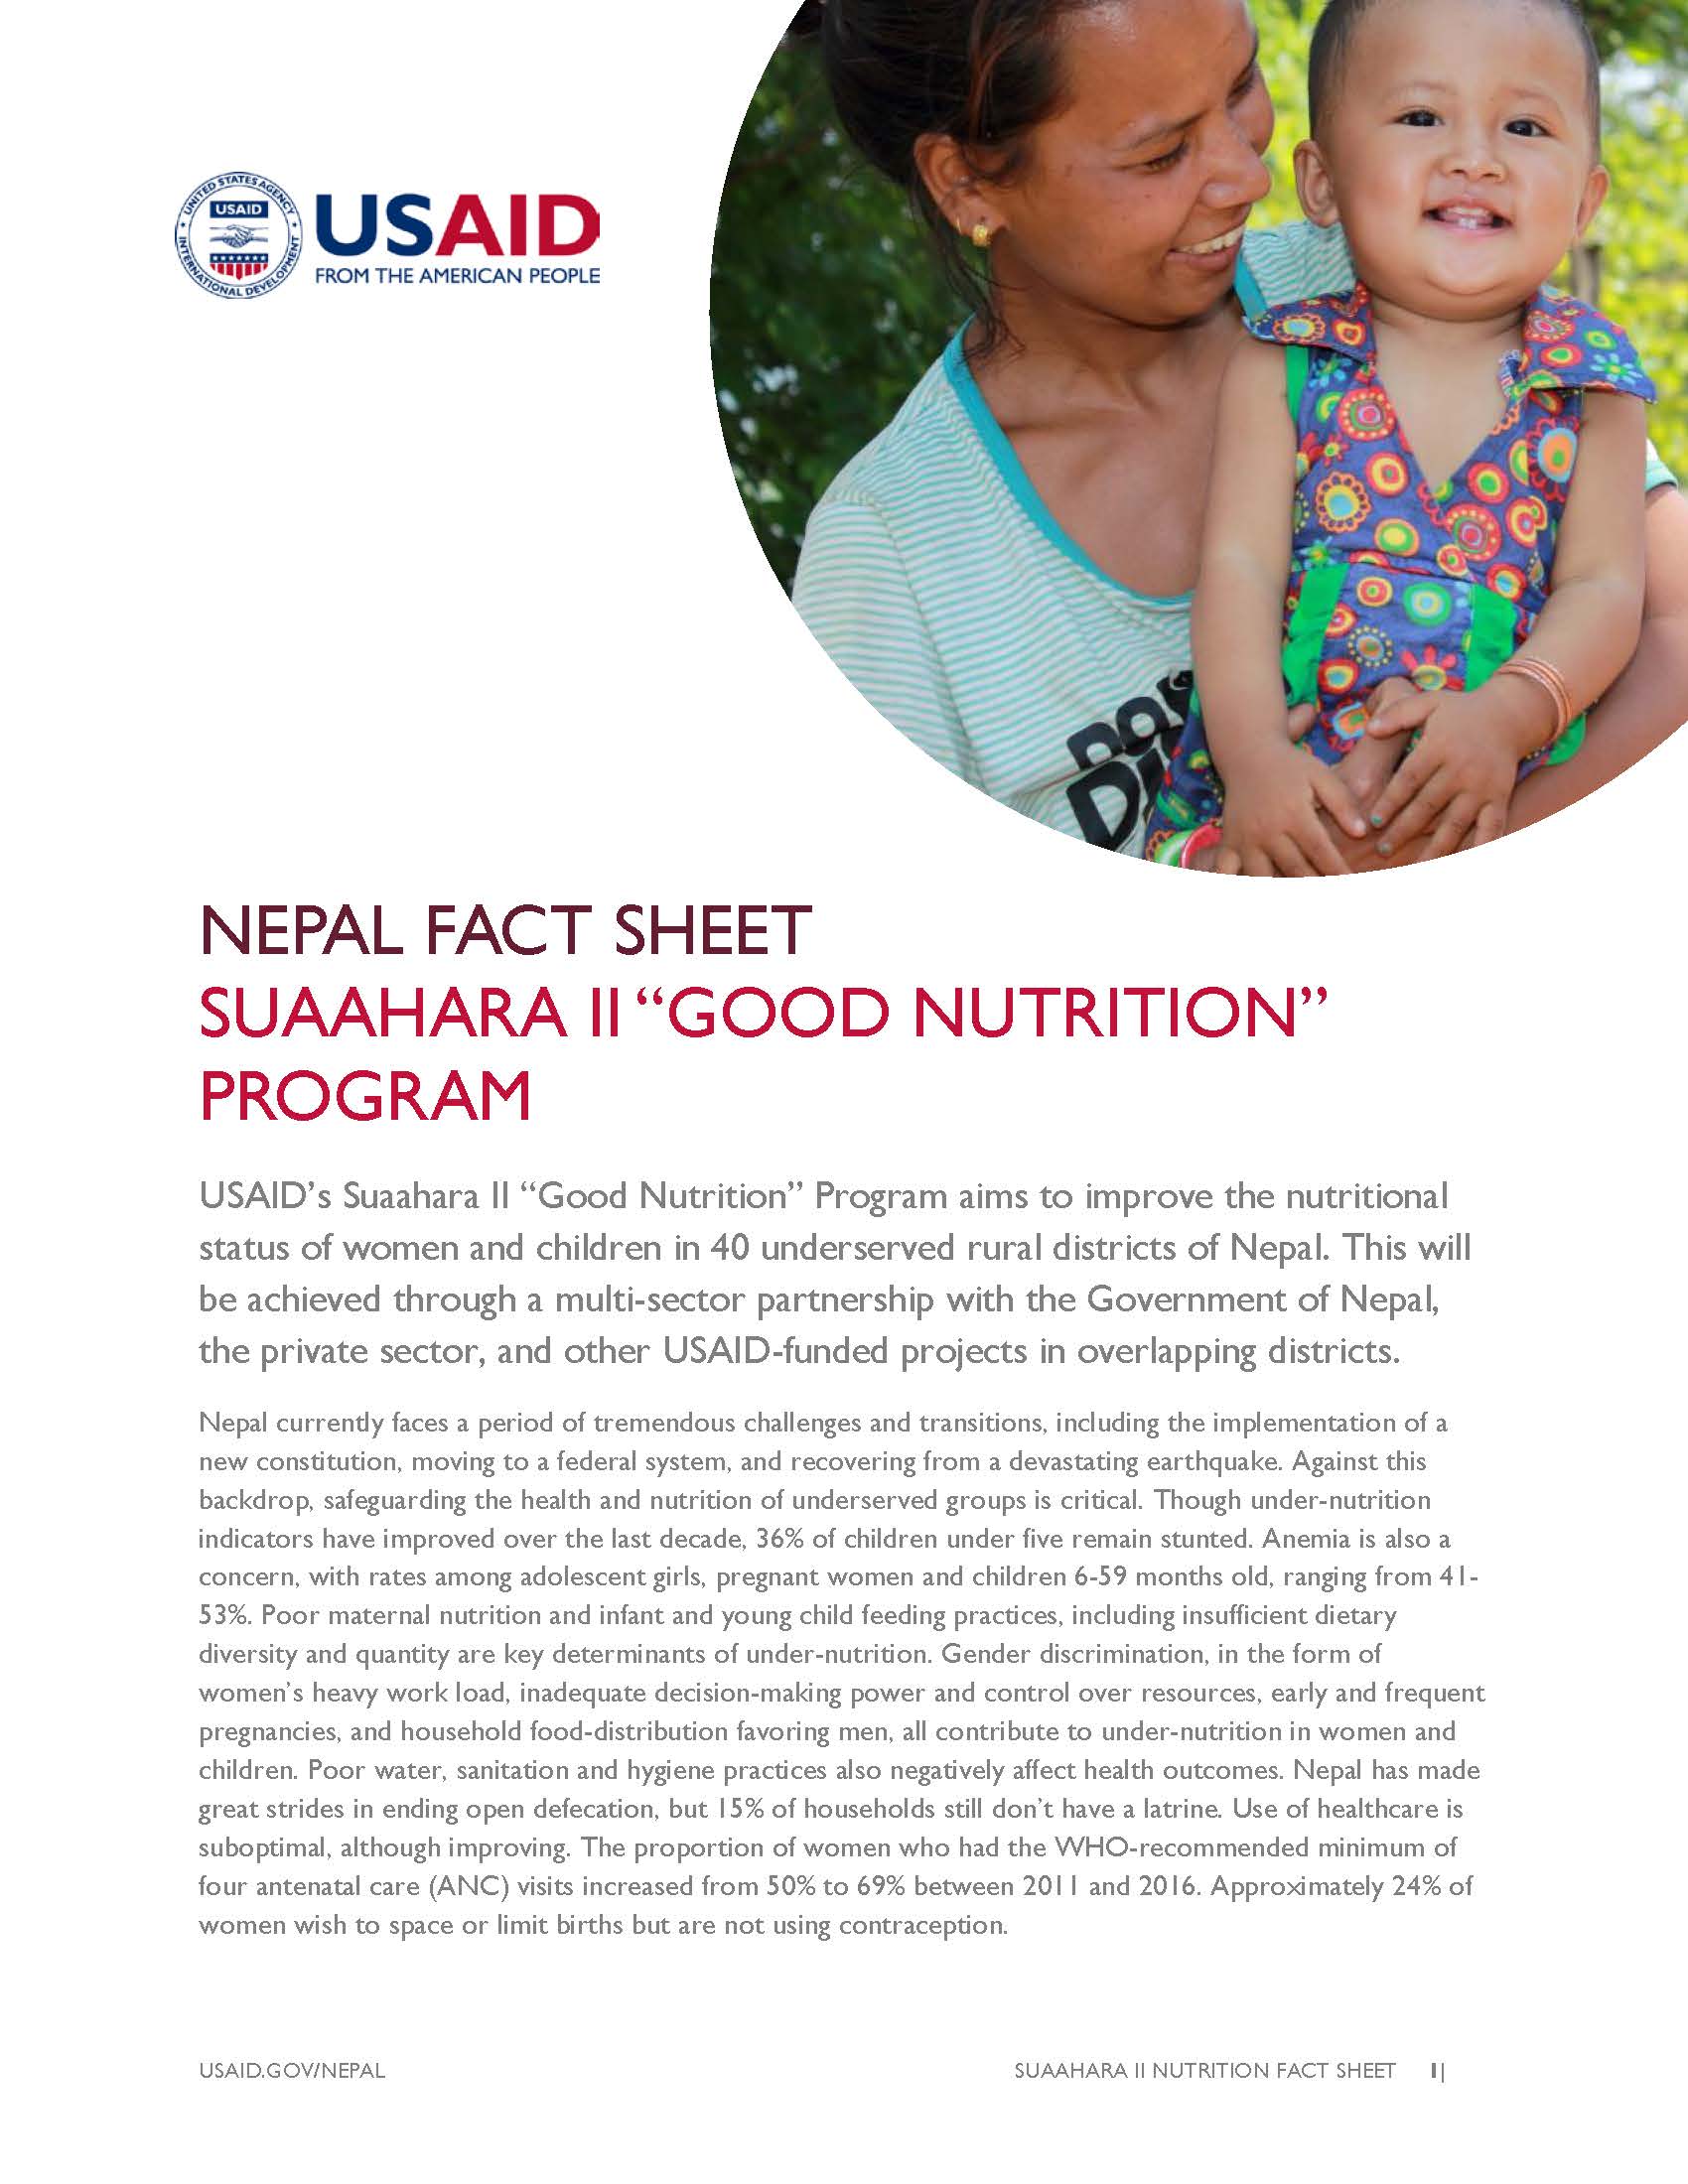 FACT SHEET: SUAAHARA PROJECT II – GOOD NUTRITION Program